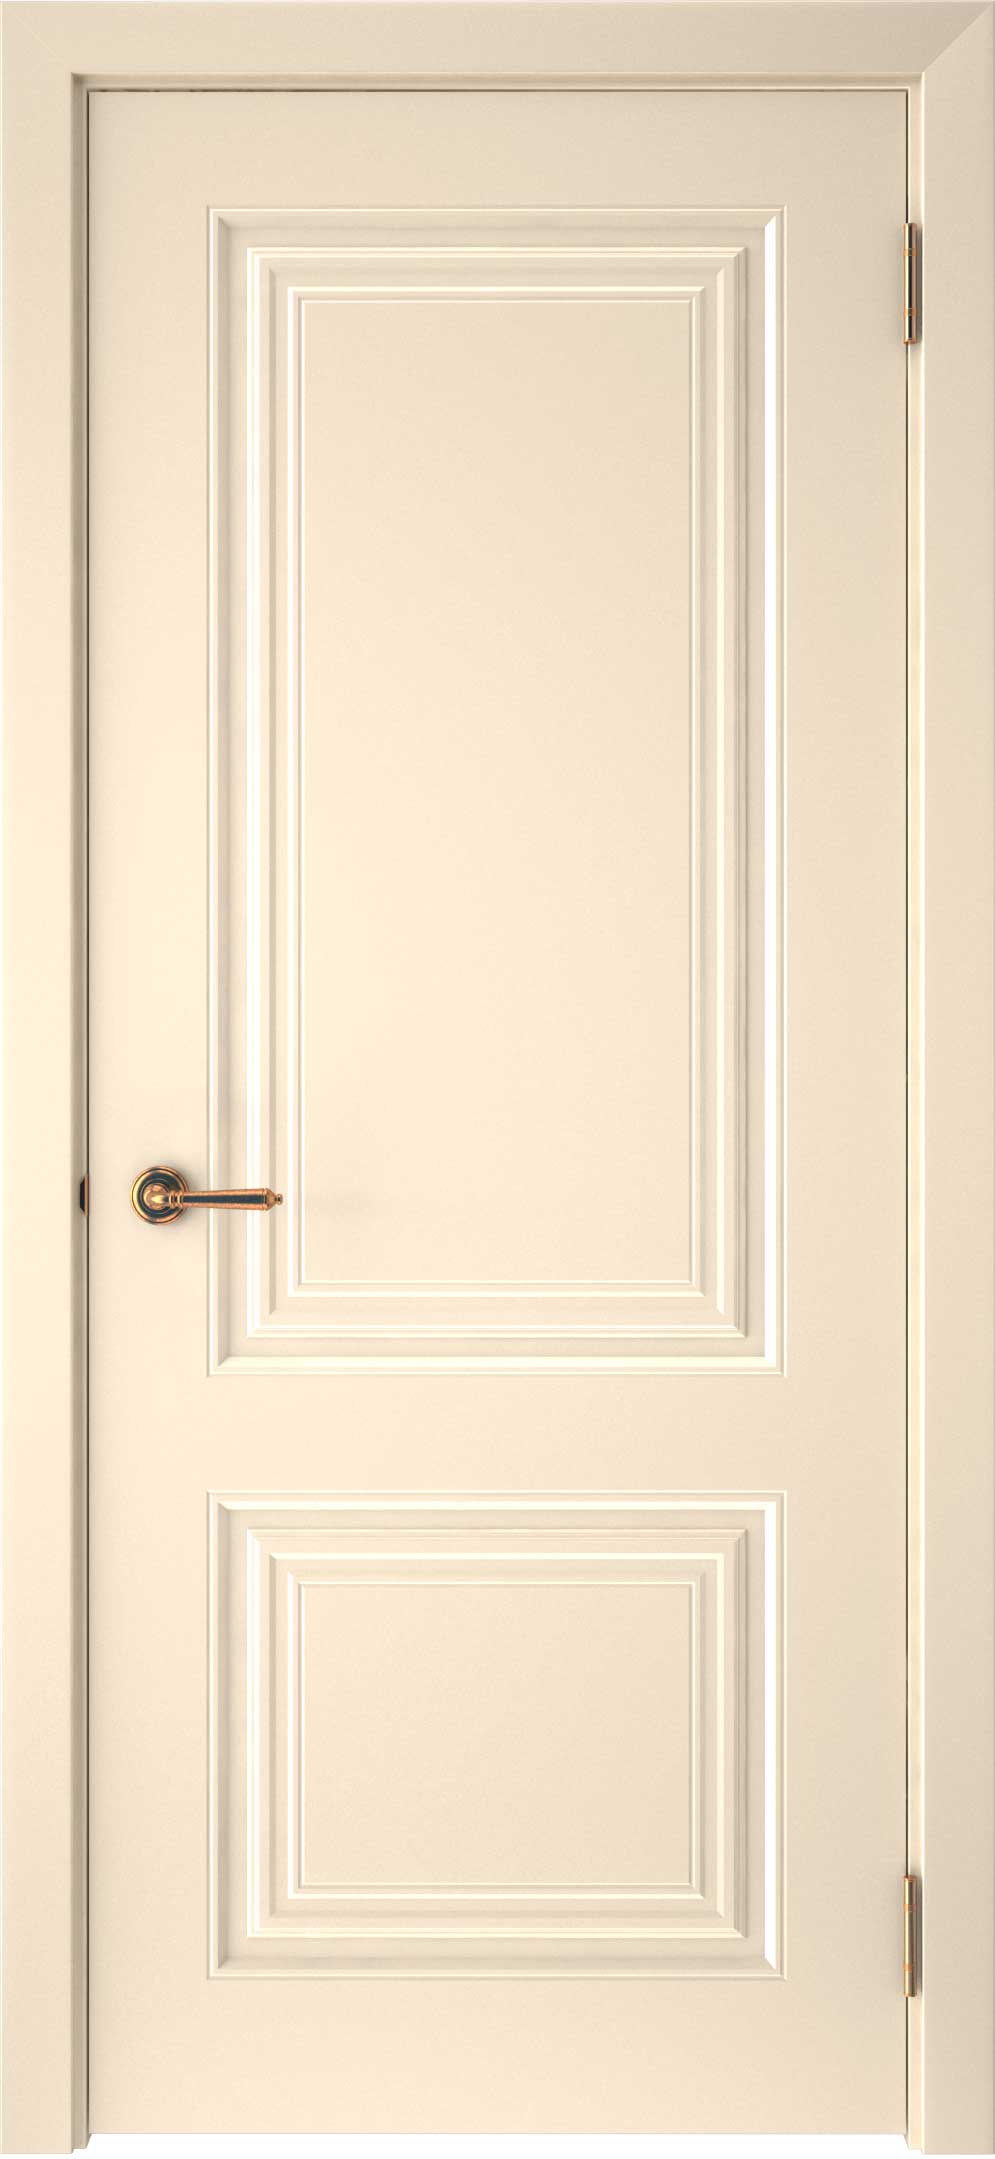 Двери крашеные (Эмаль) ТЕКОНА Смальта-42 глухое Ваниль ral размер 200 х 70 см. артикул F0000092479